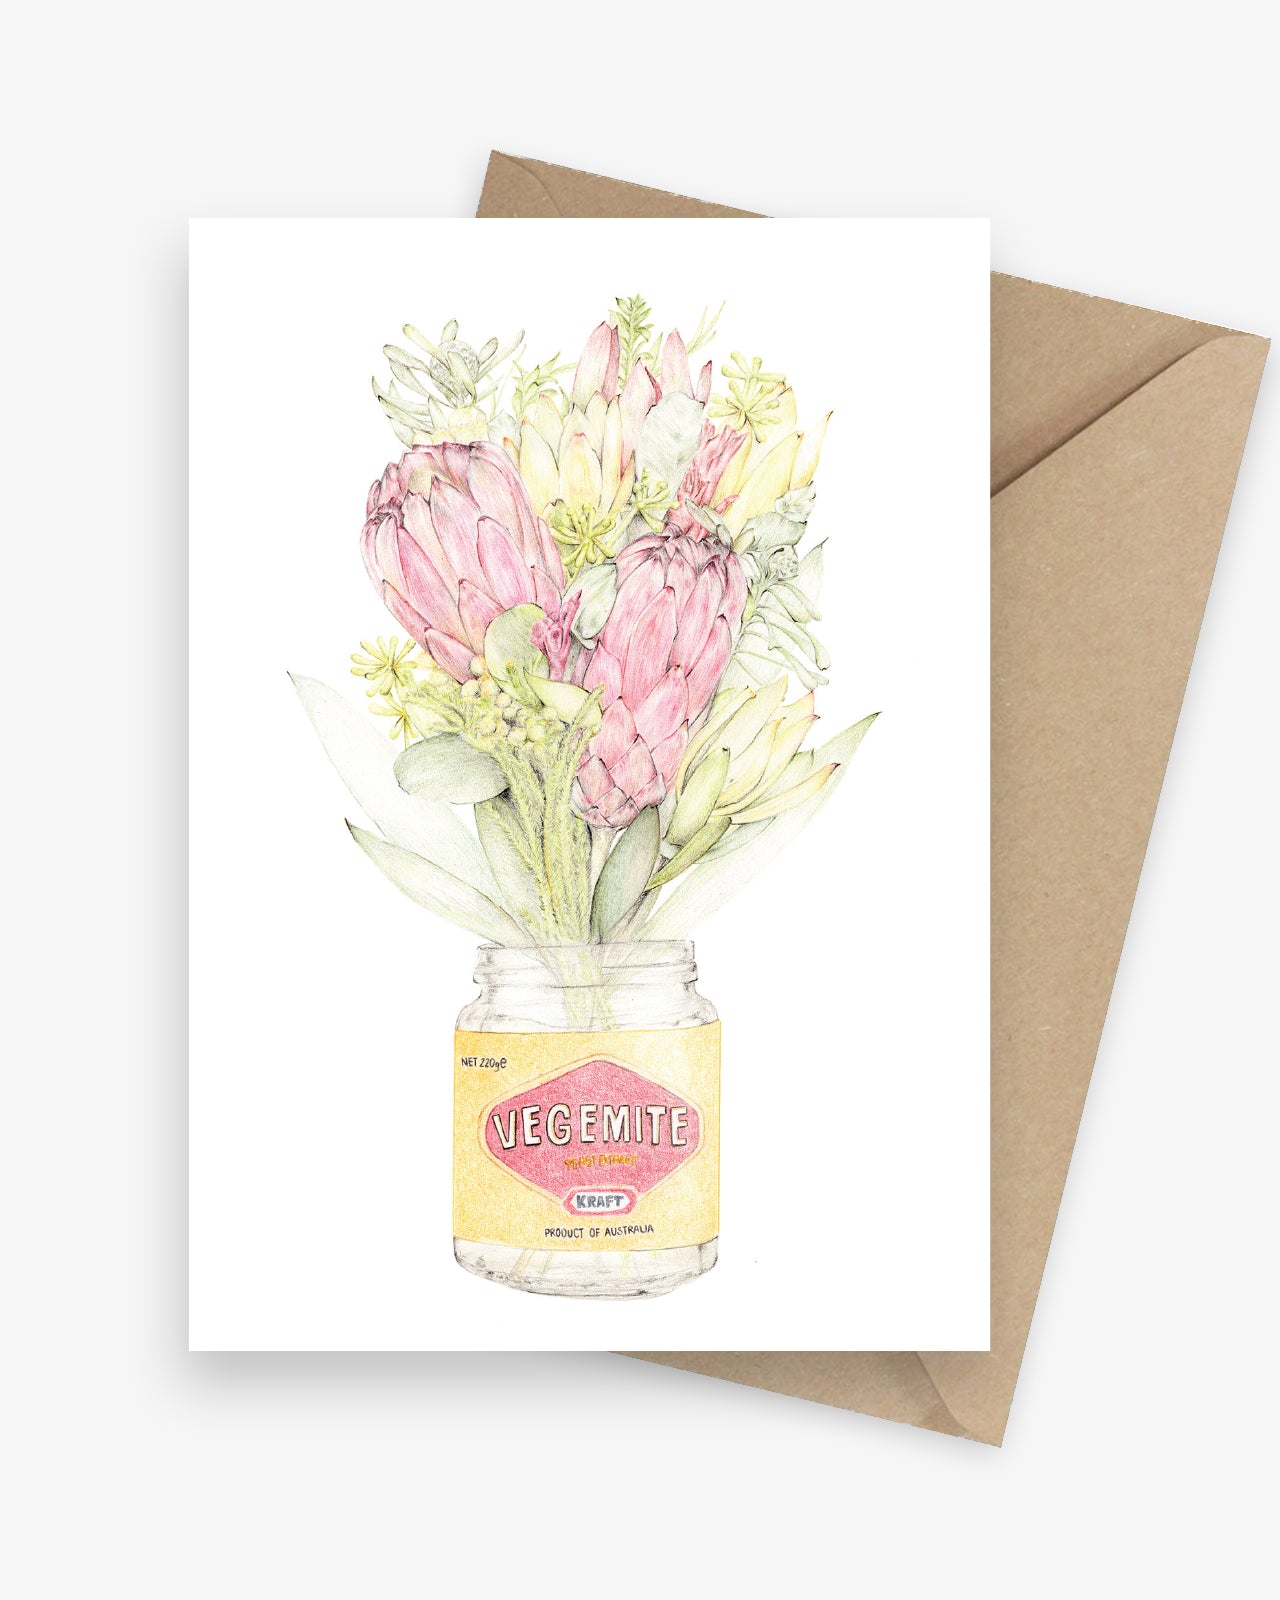 Greeting Card featuring Australian Native Flowers in a Vegemite Jar